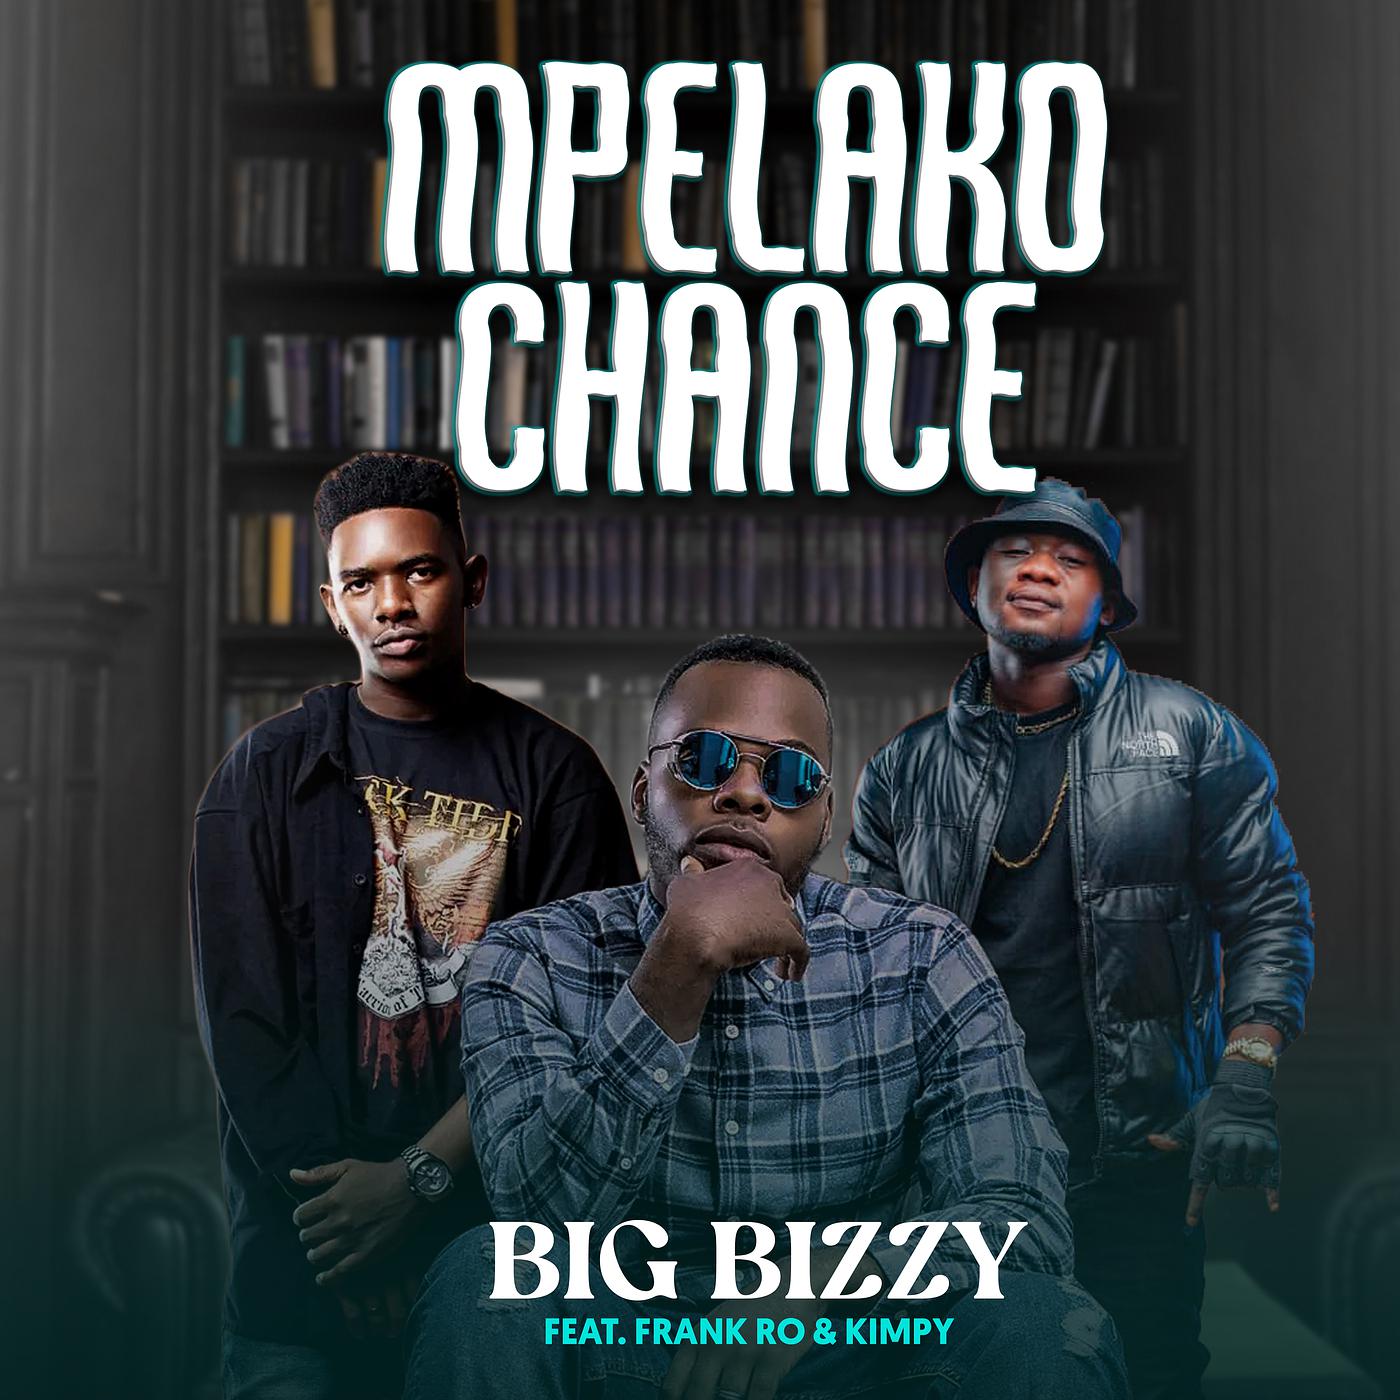 Постер альбома Mpelako Chance